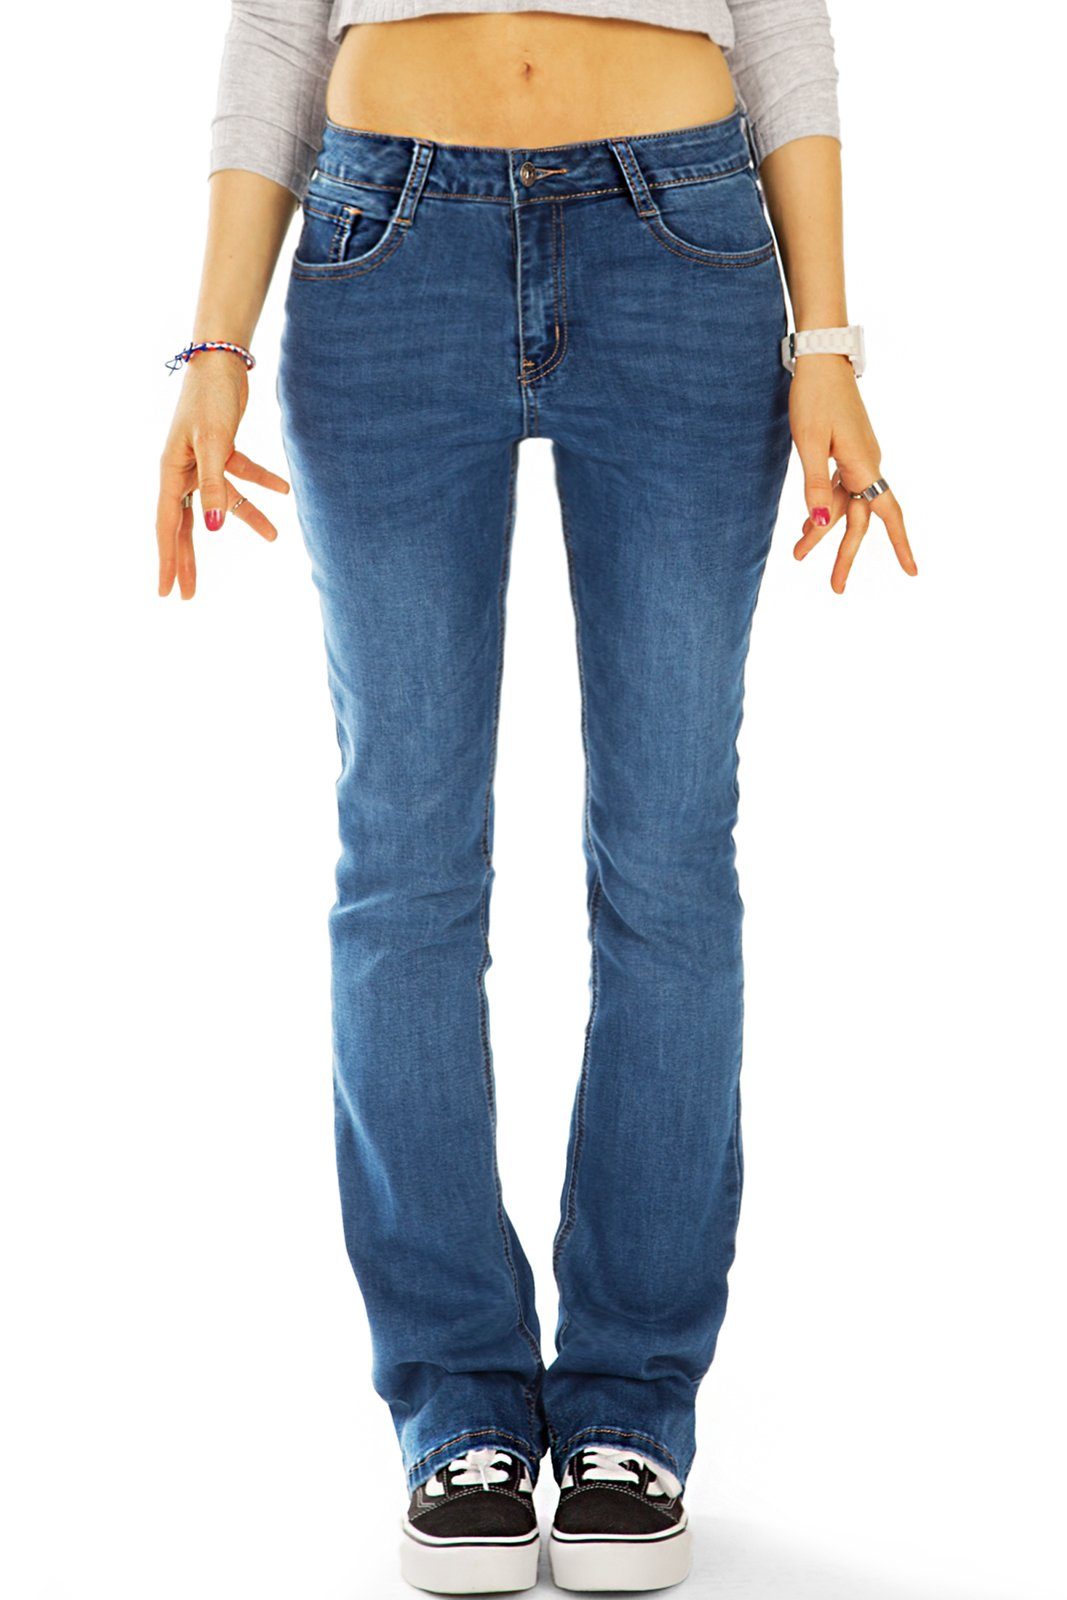 j47L Stretch-Anteil waist 5-Pocket-Style, - be bootcut Hosen, Damen mit regular - styled Schlaghose Jeans Bootcut-Jeans Medium